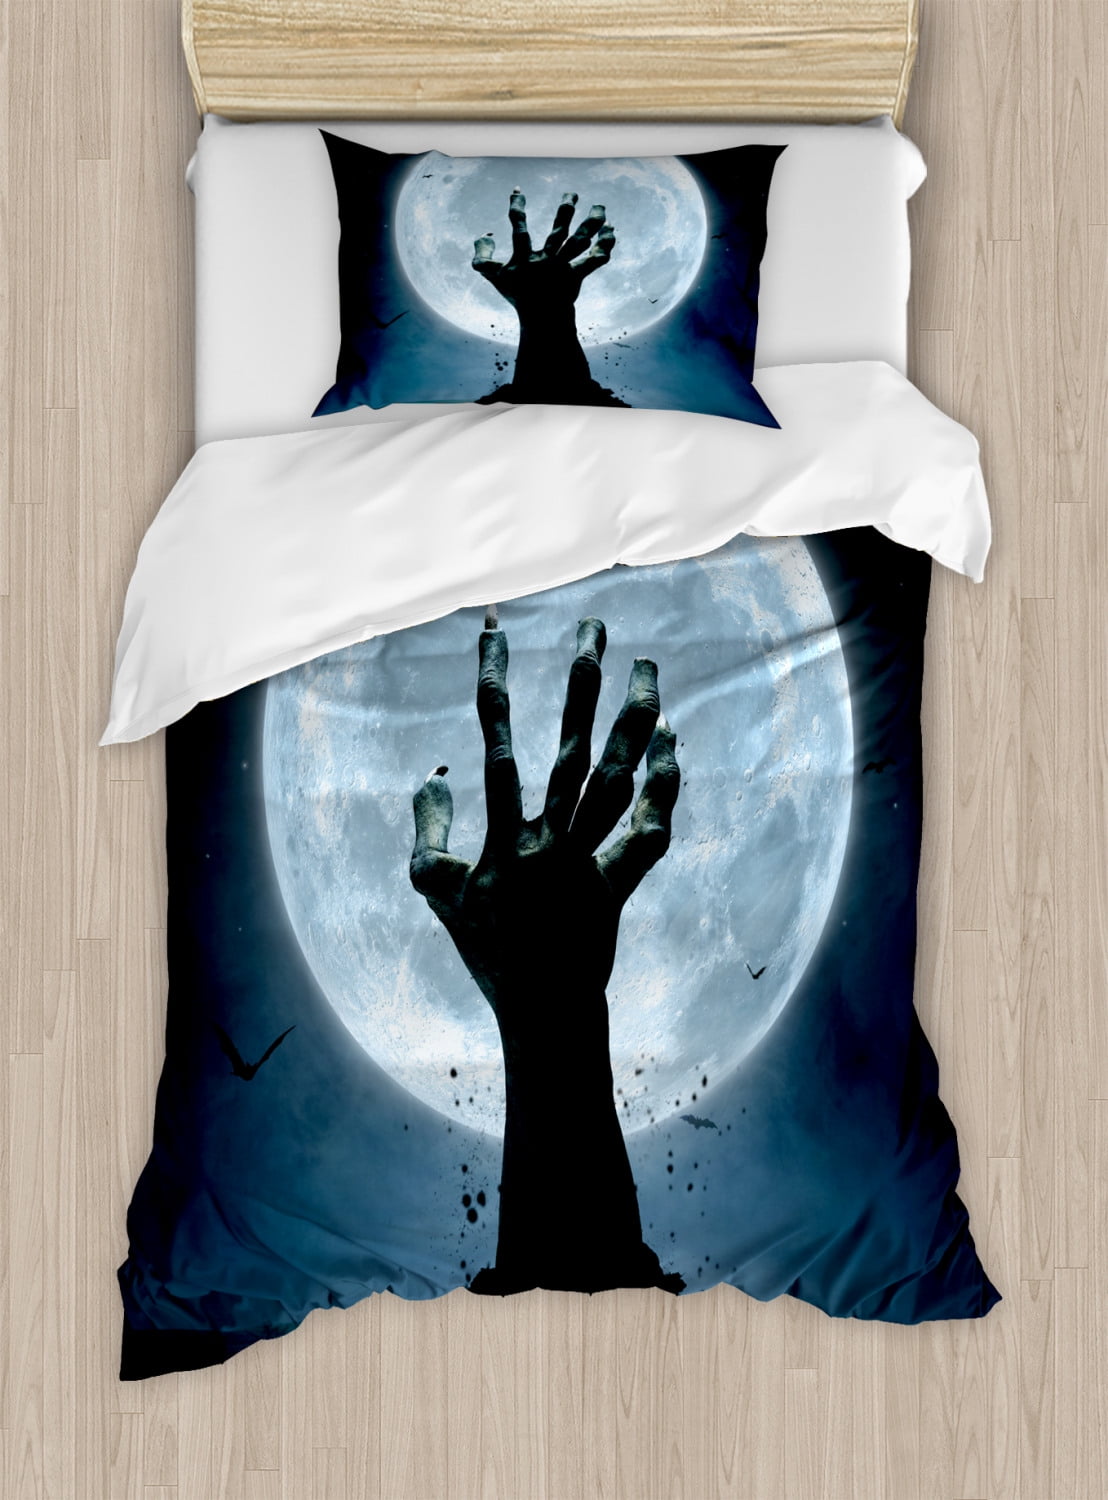 3PCS Halloween 3D Bedding Set Quilt Duvet Cover Pillowcase Horror Bedroom 2PCS 